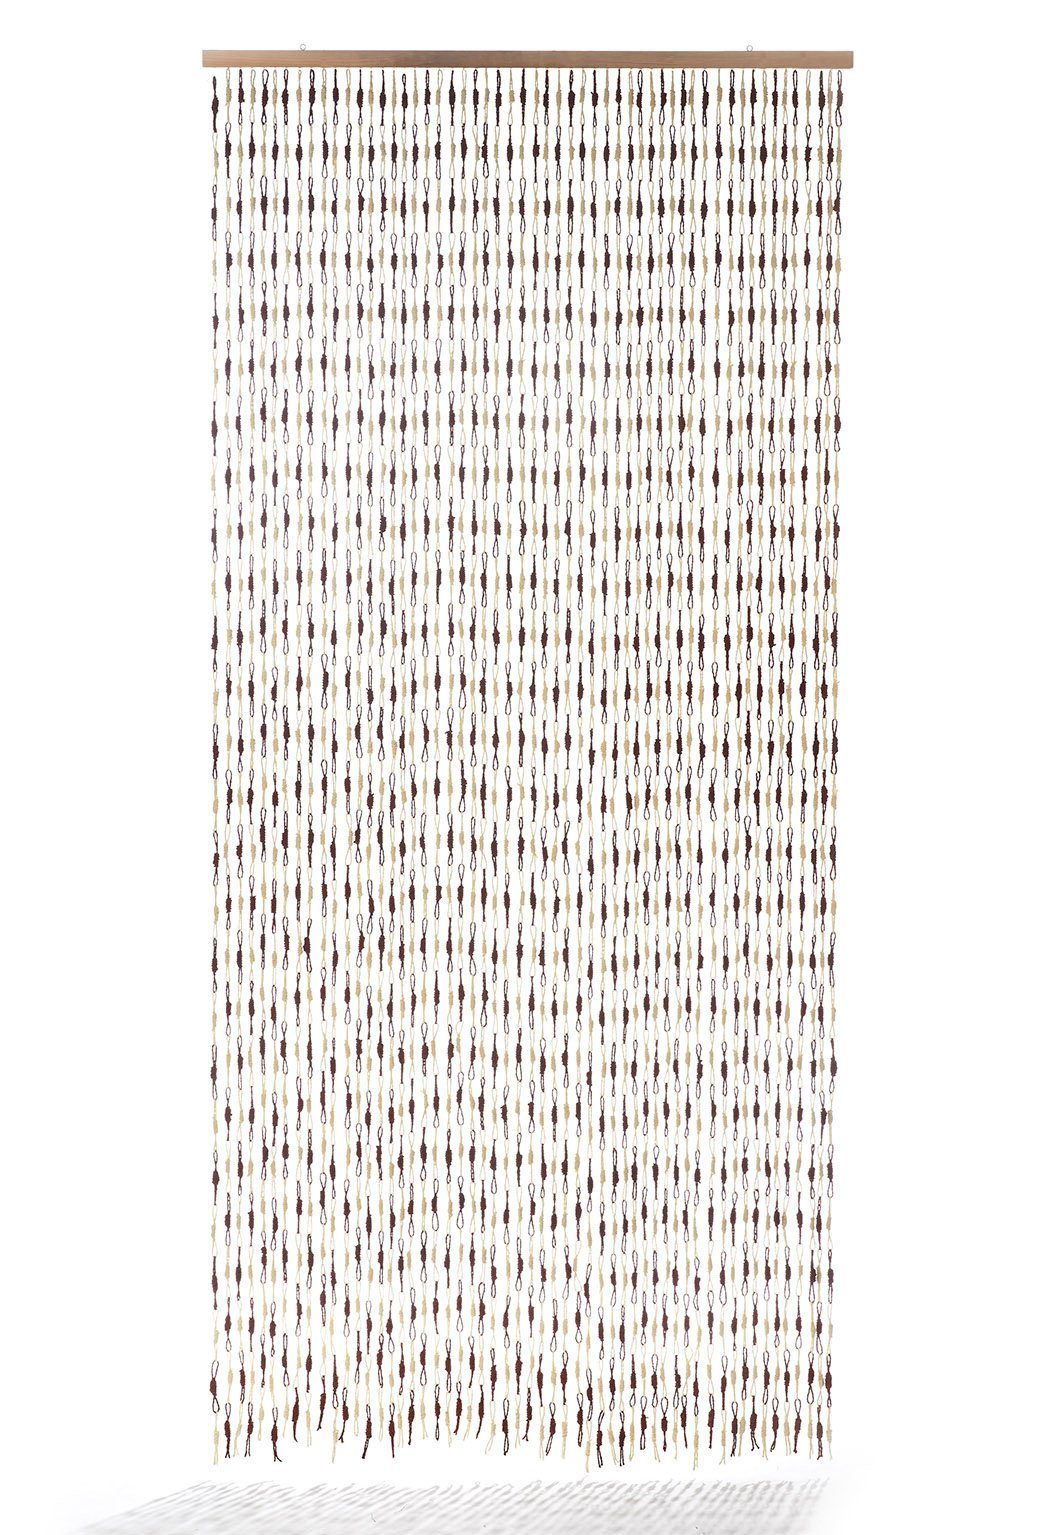 (1 St) - Ösen KNOTS braun - Papier, Papiervorhang Vorhang cm 100x220 Türvorhang - Kobolo,